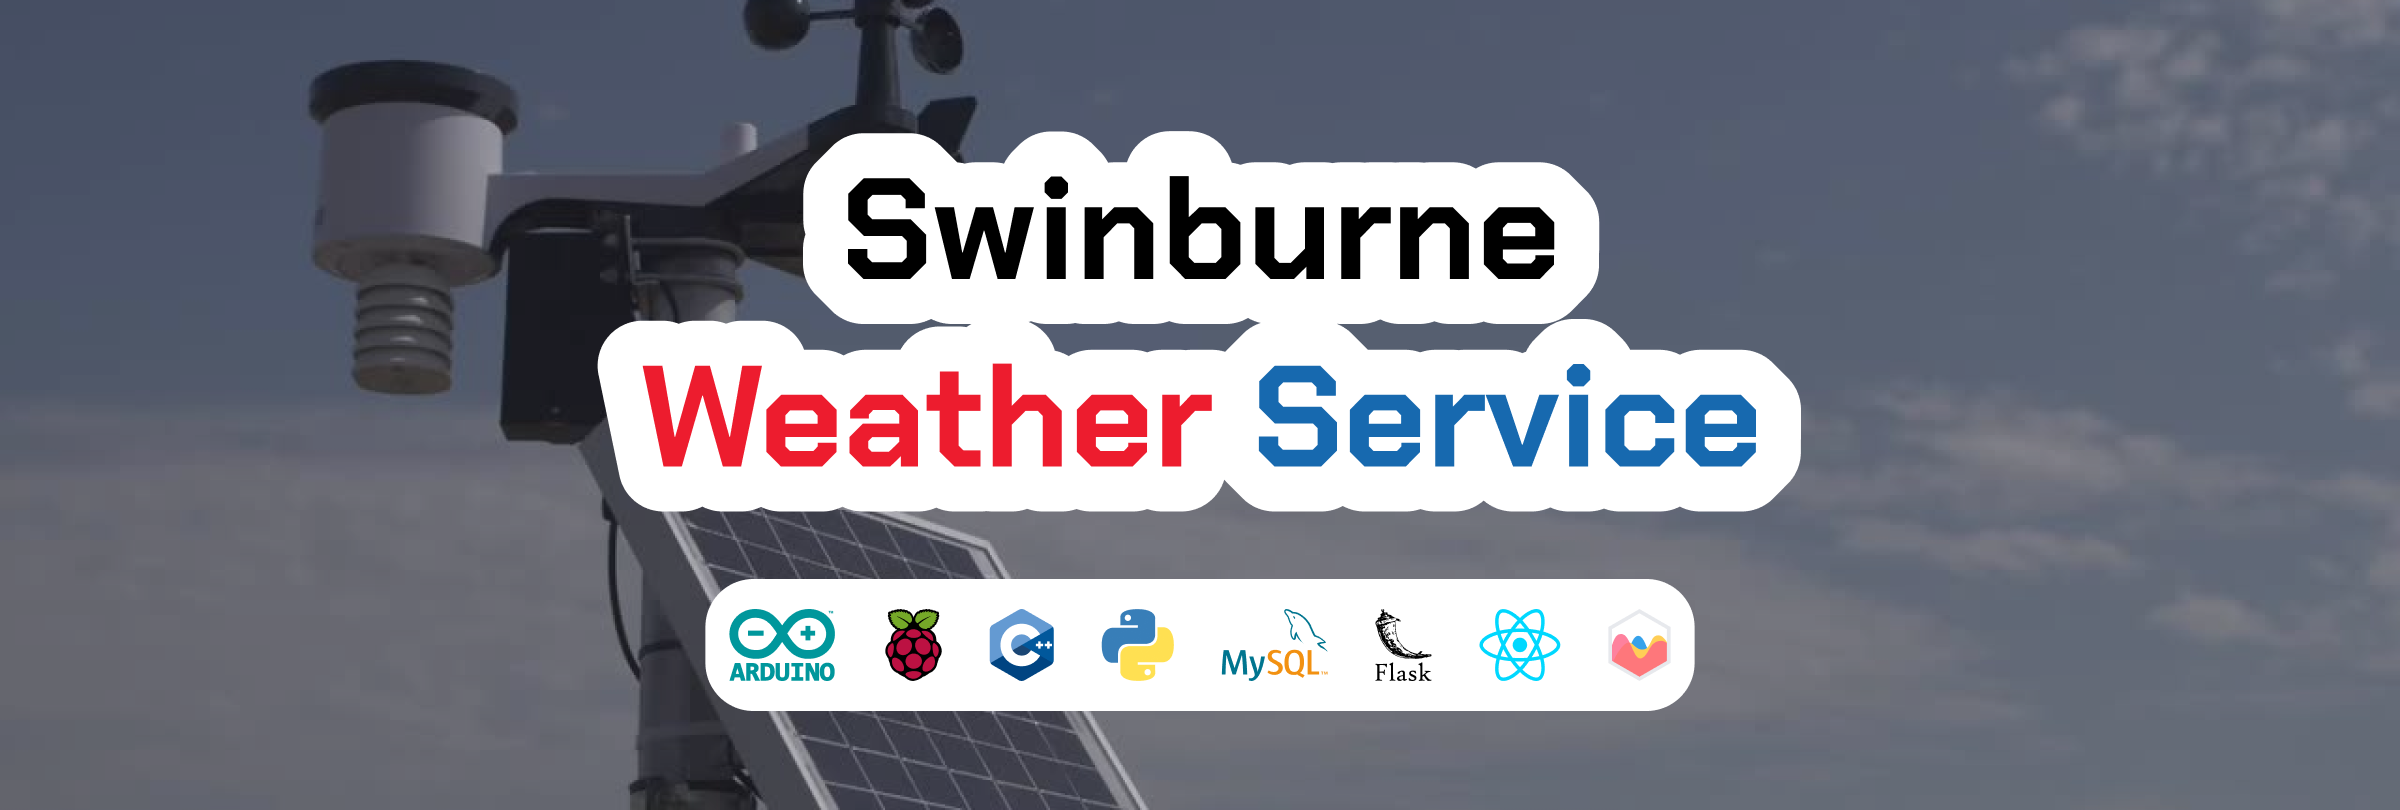 Swinburne Weather Service.png